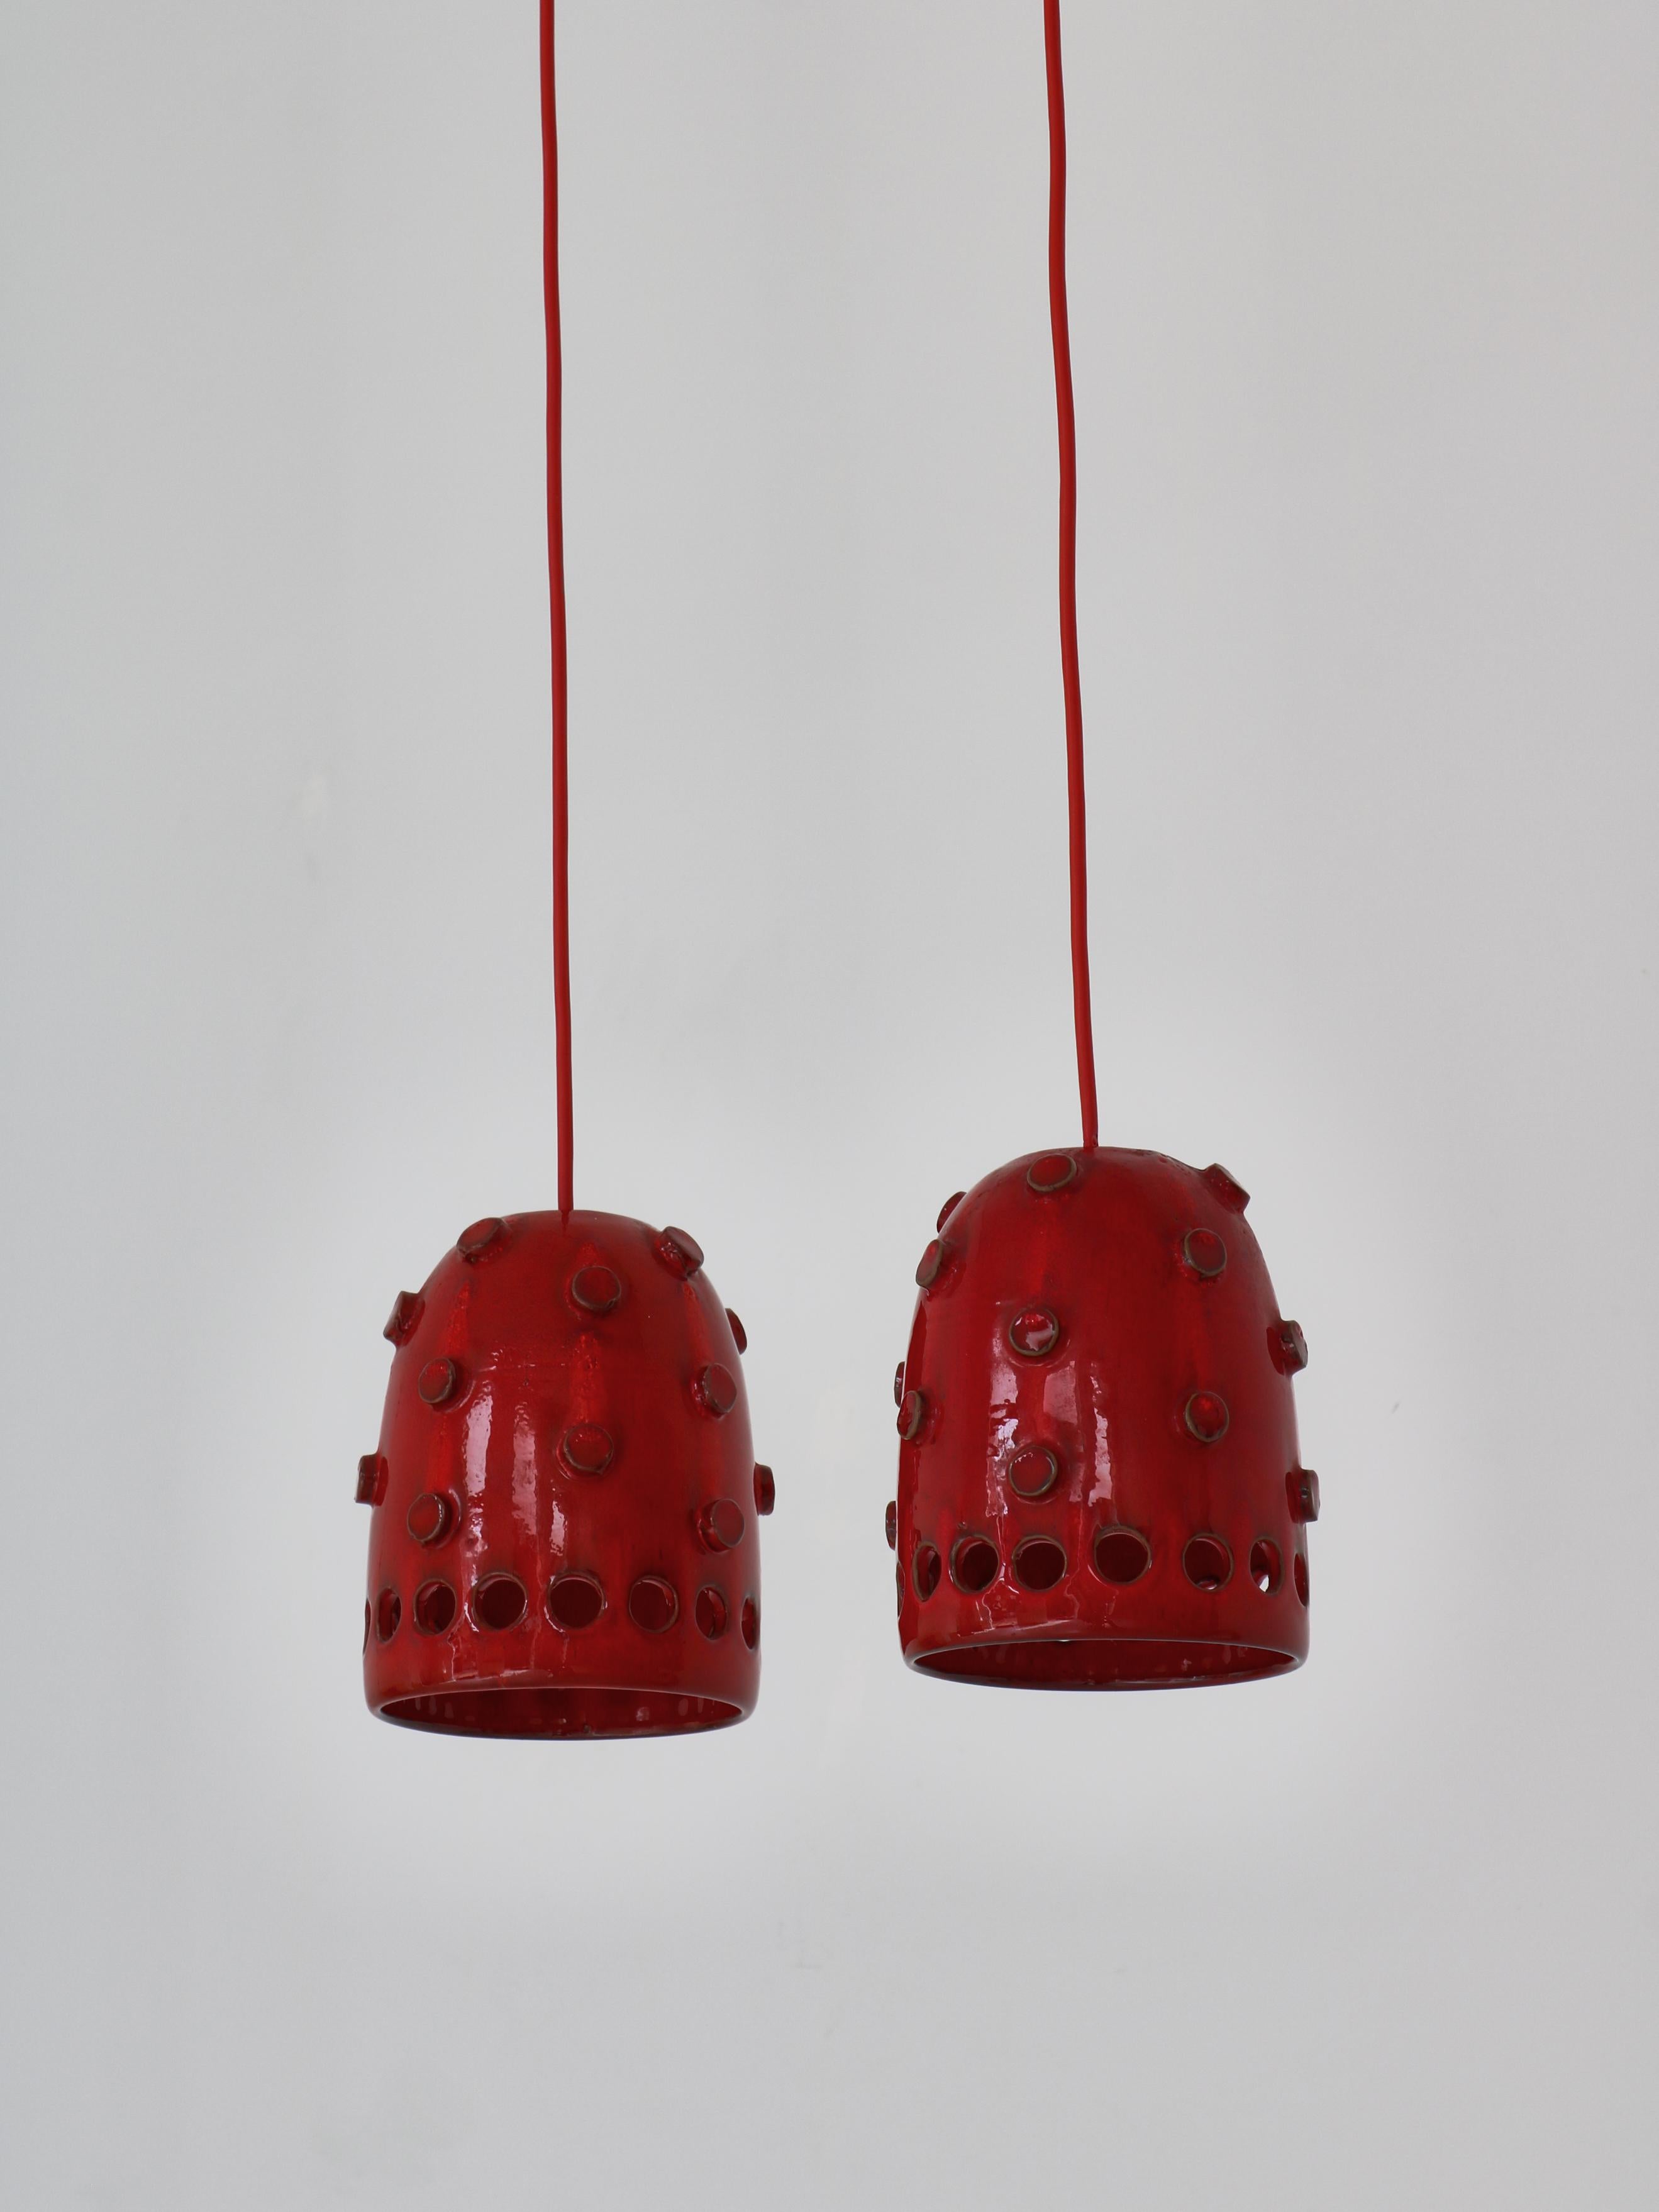 Late 20th Century Danish Modern Red Ceramics Pendants by Jette Hellerøe at Axella Studio, 1970s For Sale